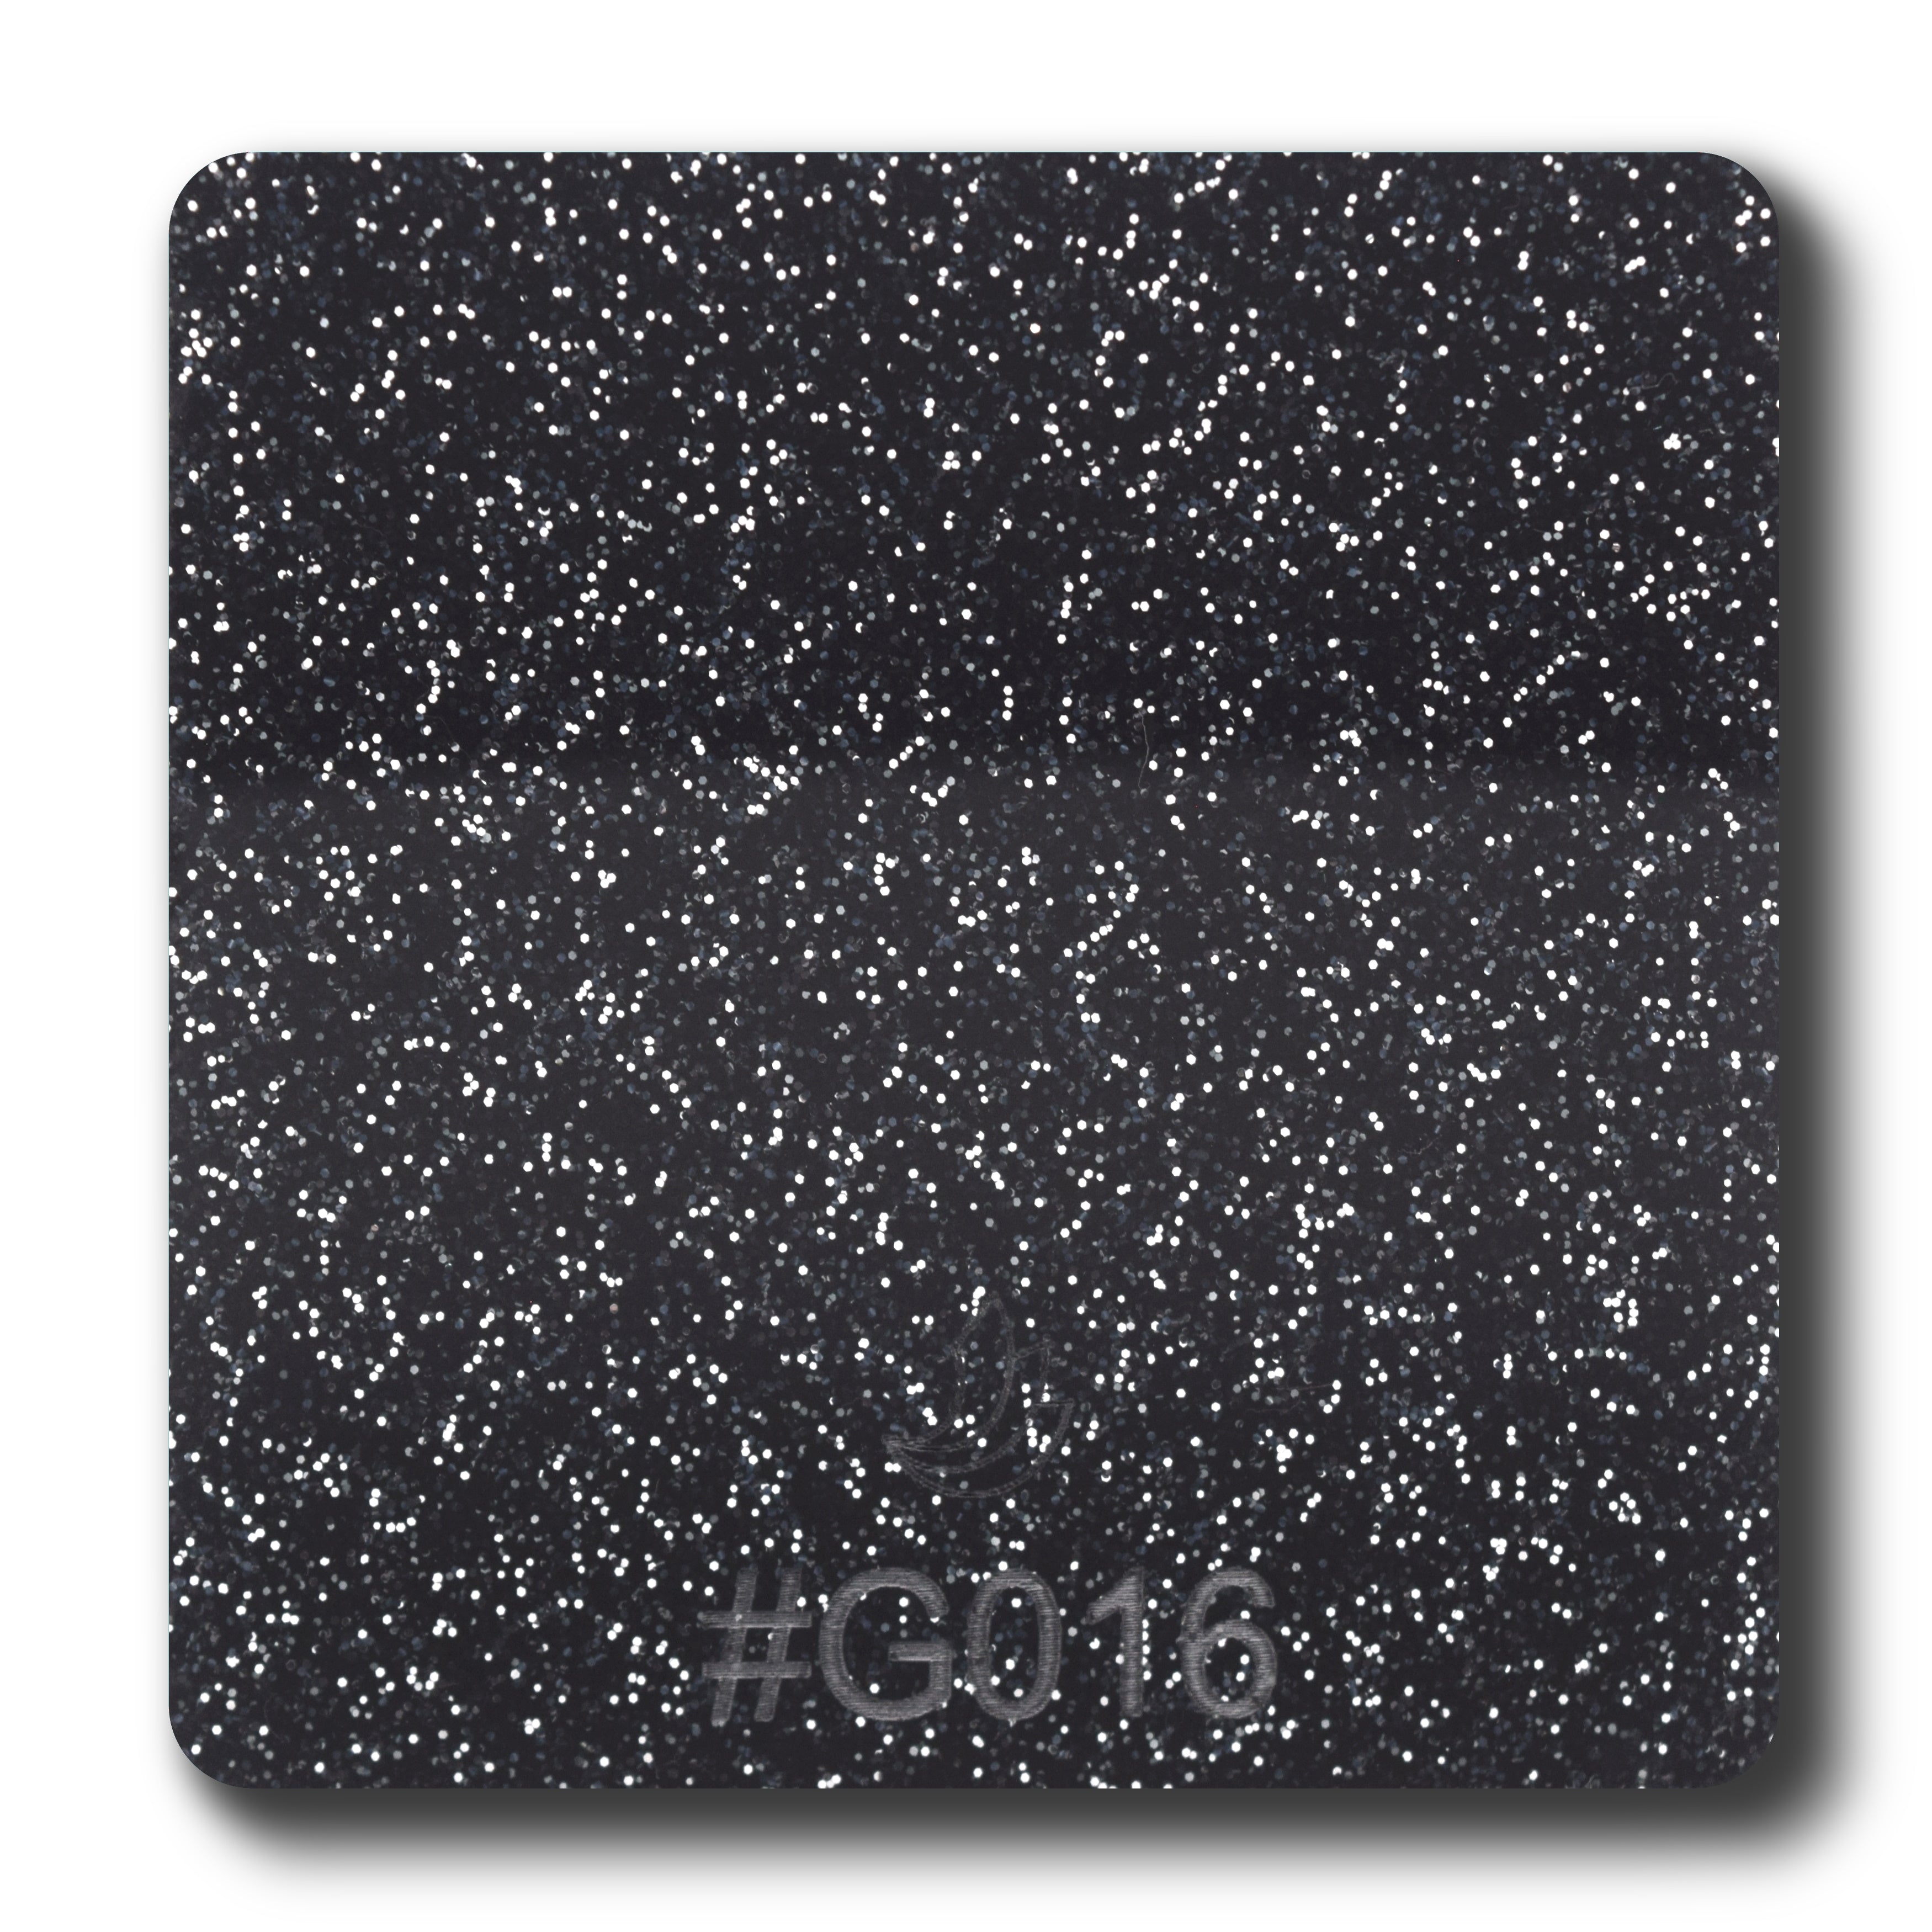 1/8" Black Glitter Two-Sided Acrylic Sheet